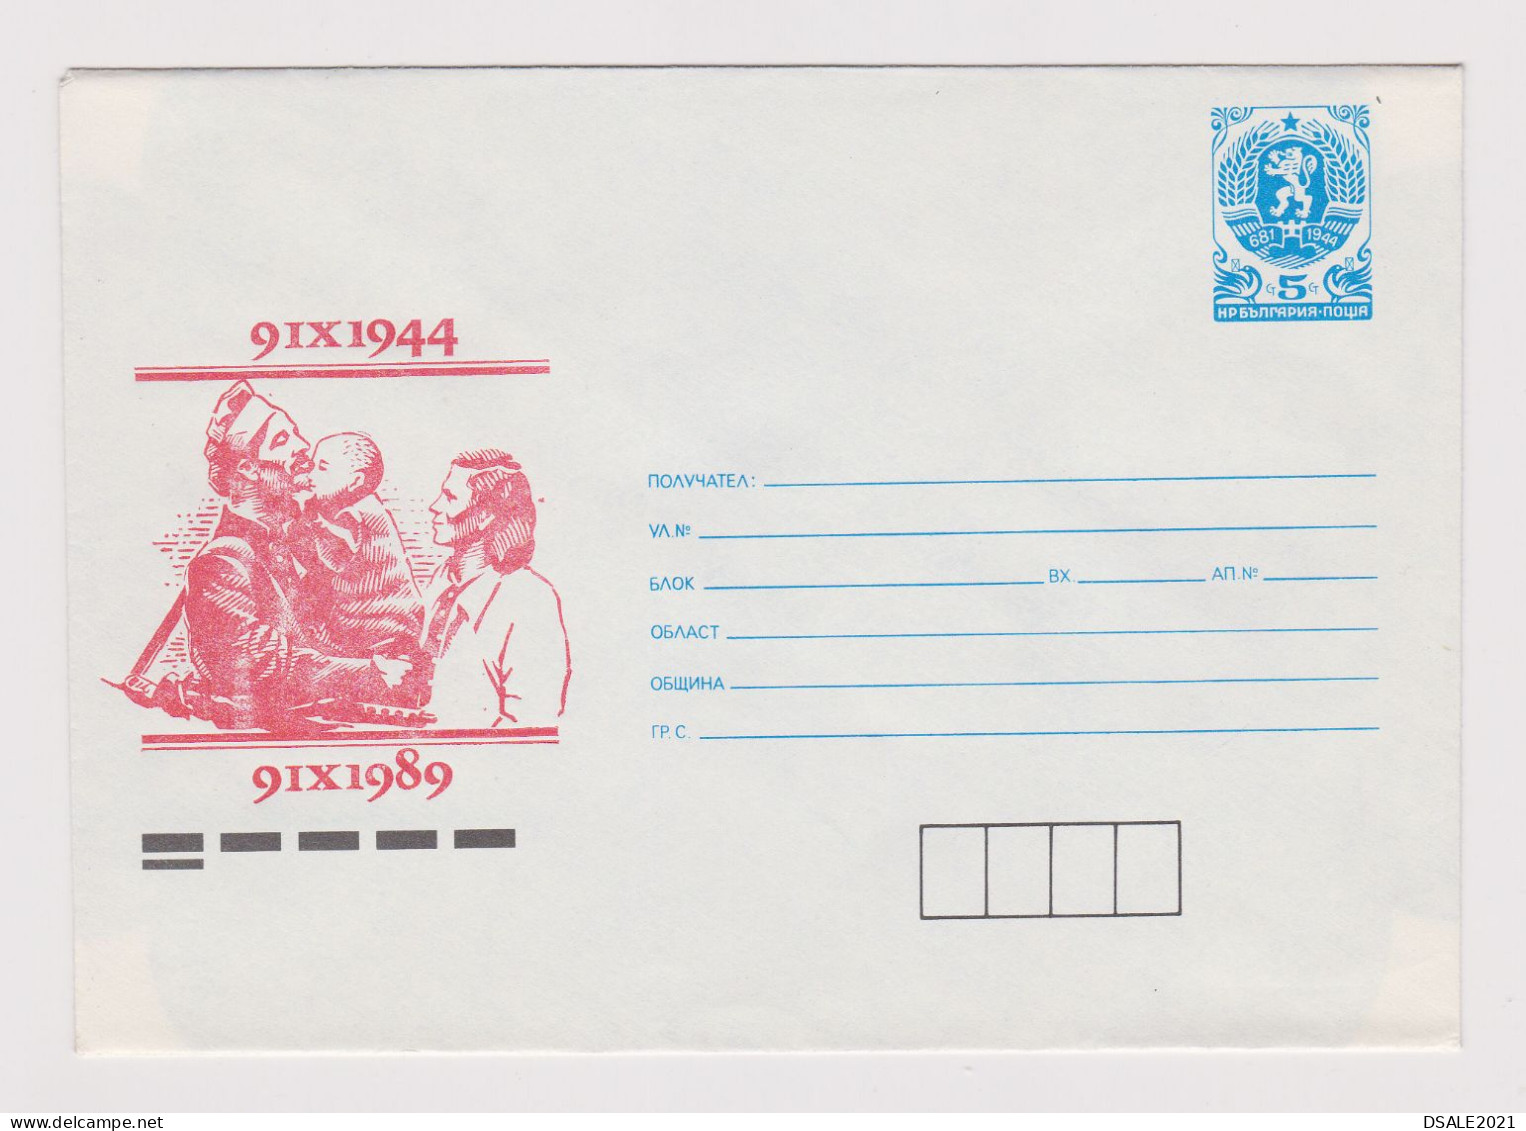 Bulgaria Bulgarien Ganzsachen Brief, Entier, Postal Stationery Cover PSE, 1944-1989 Communist Propaganda Unused 839 - Covers